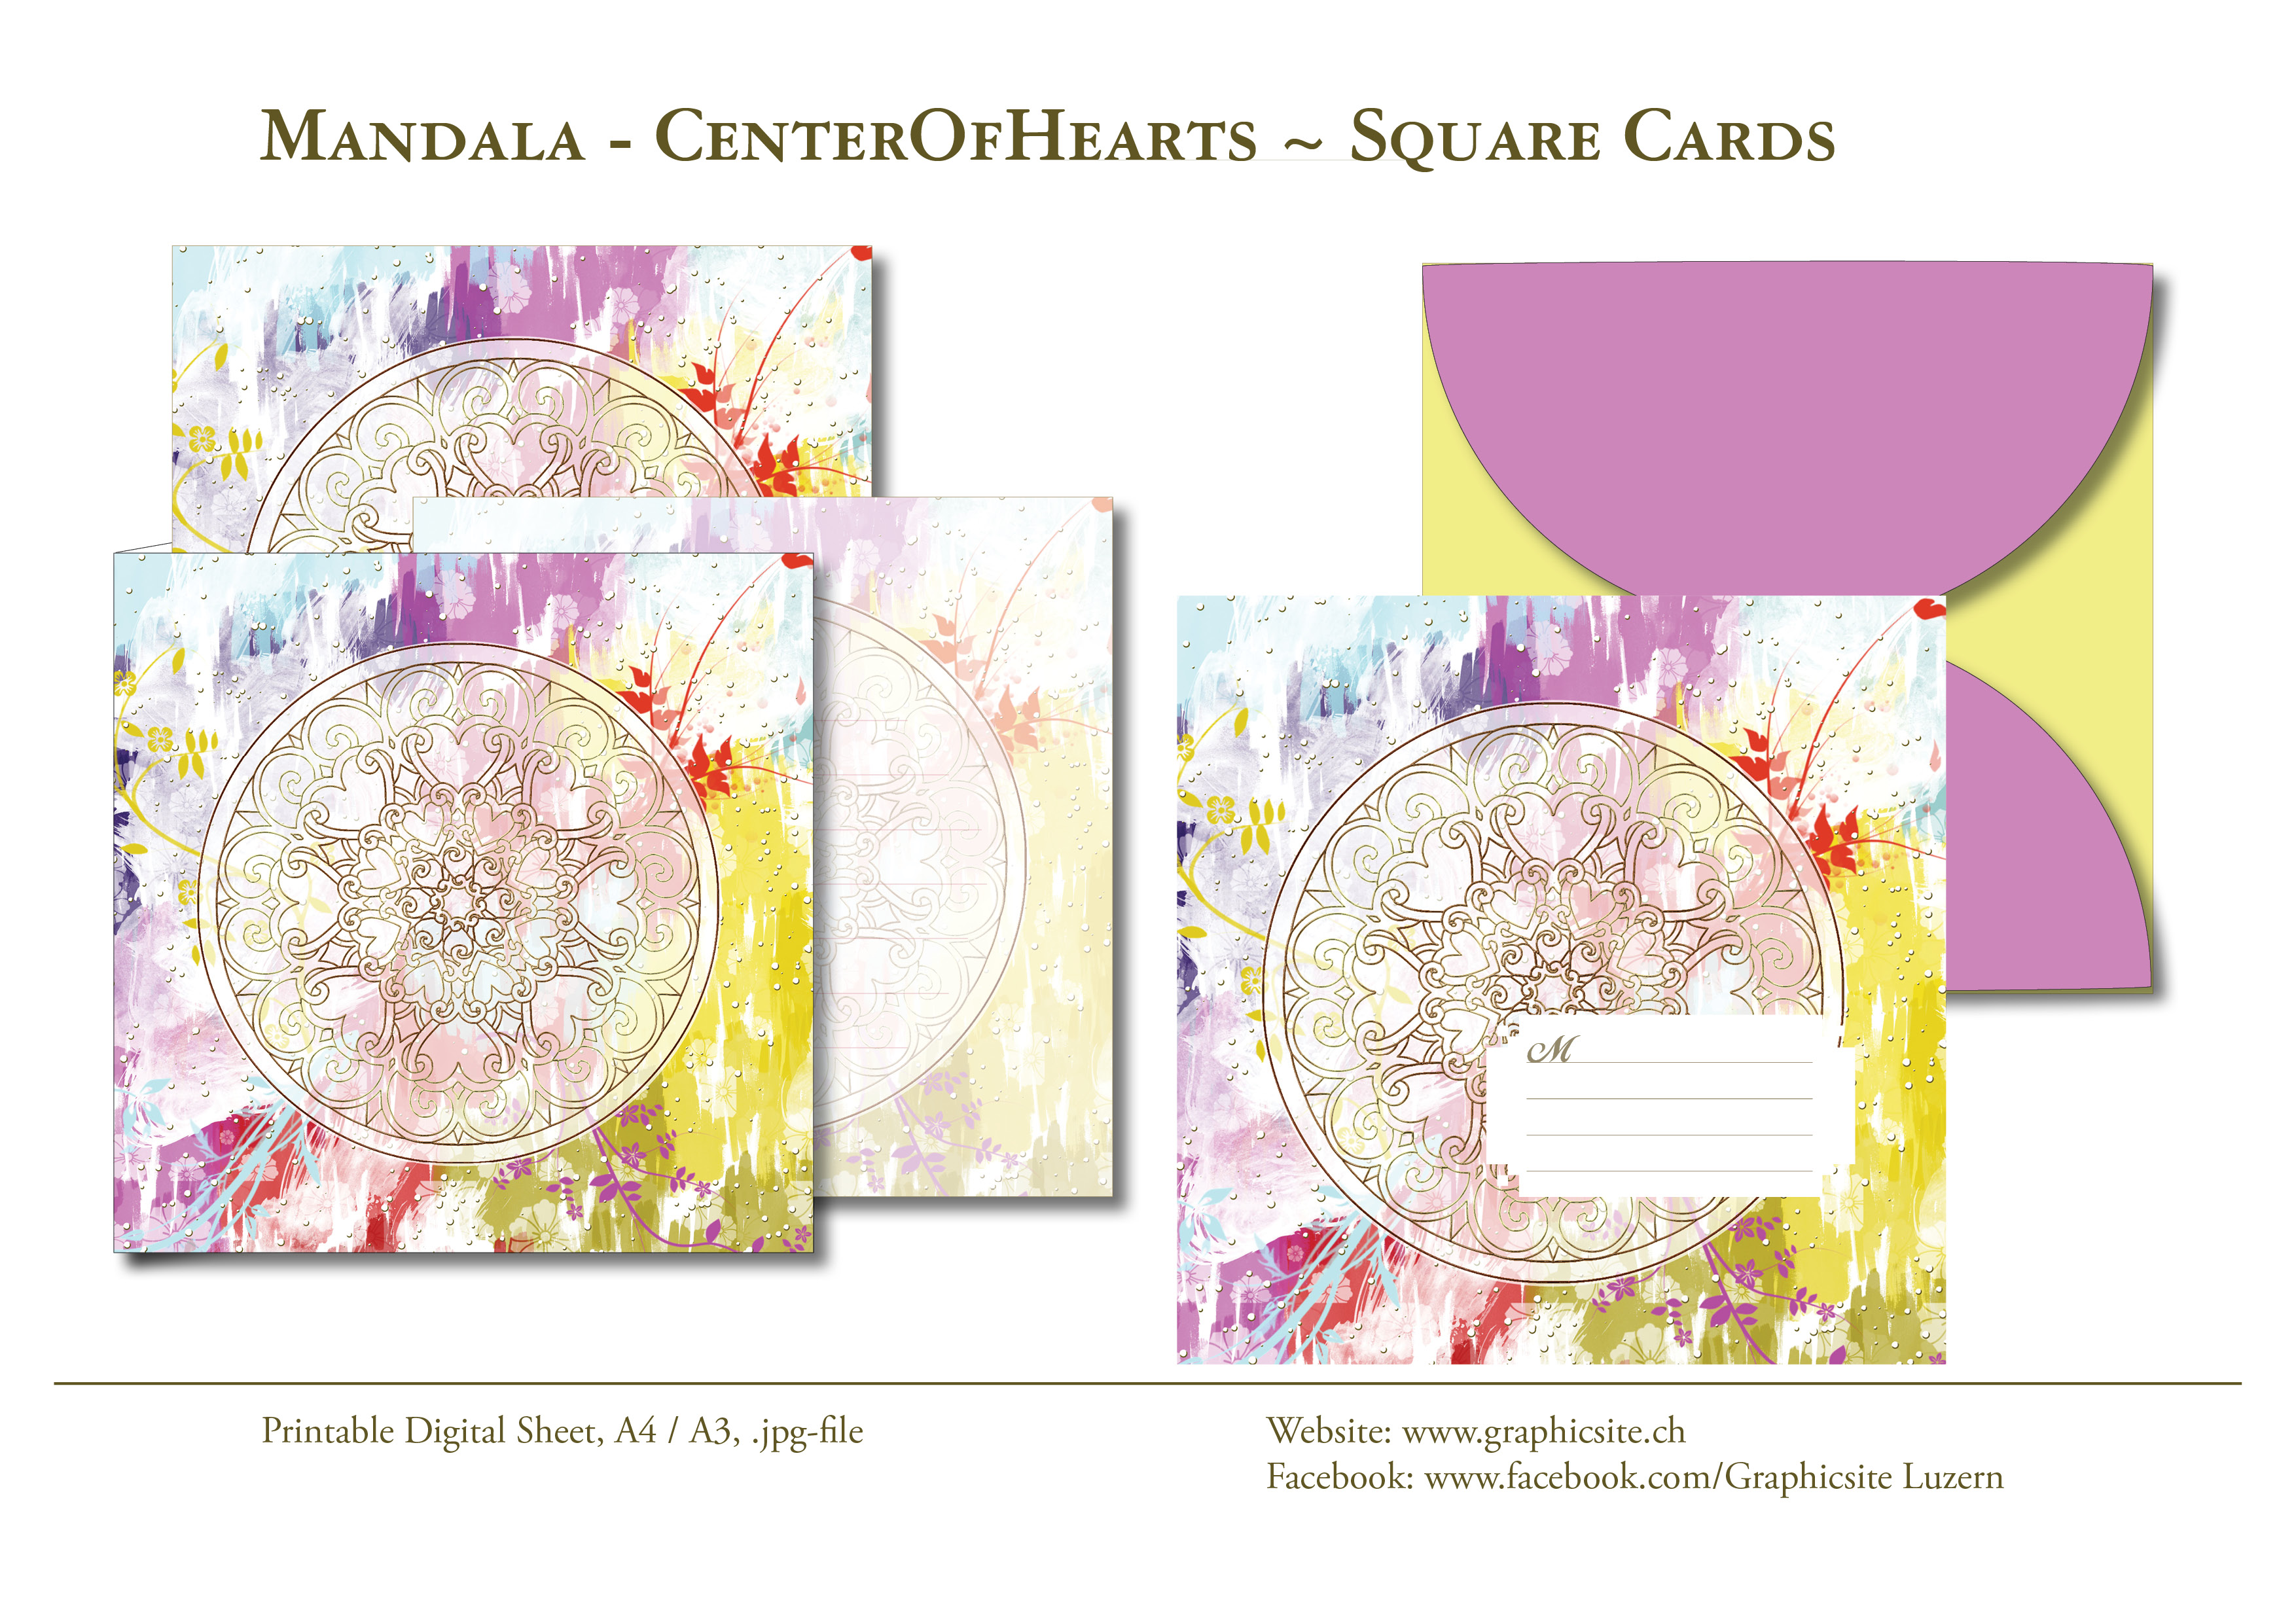 Karten selber drucken - Mandala CenterOfHearts - Karten, Grusskarten, Kuvert, Grafiker Luzern, Schweiz